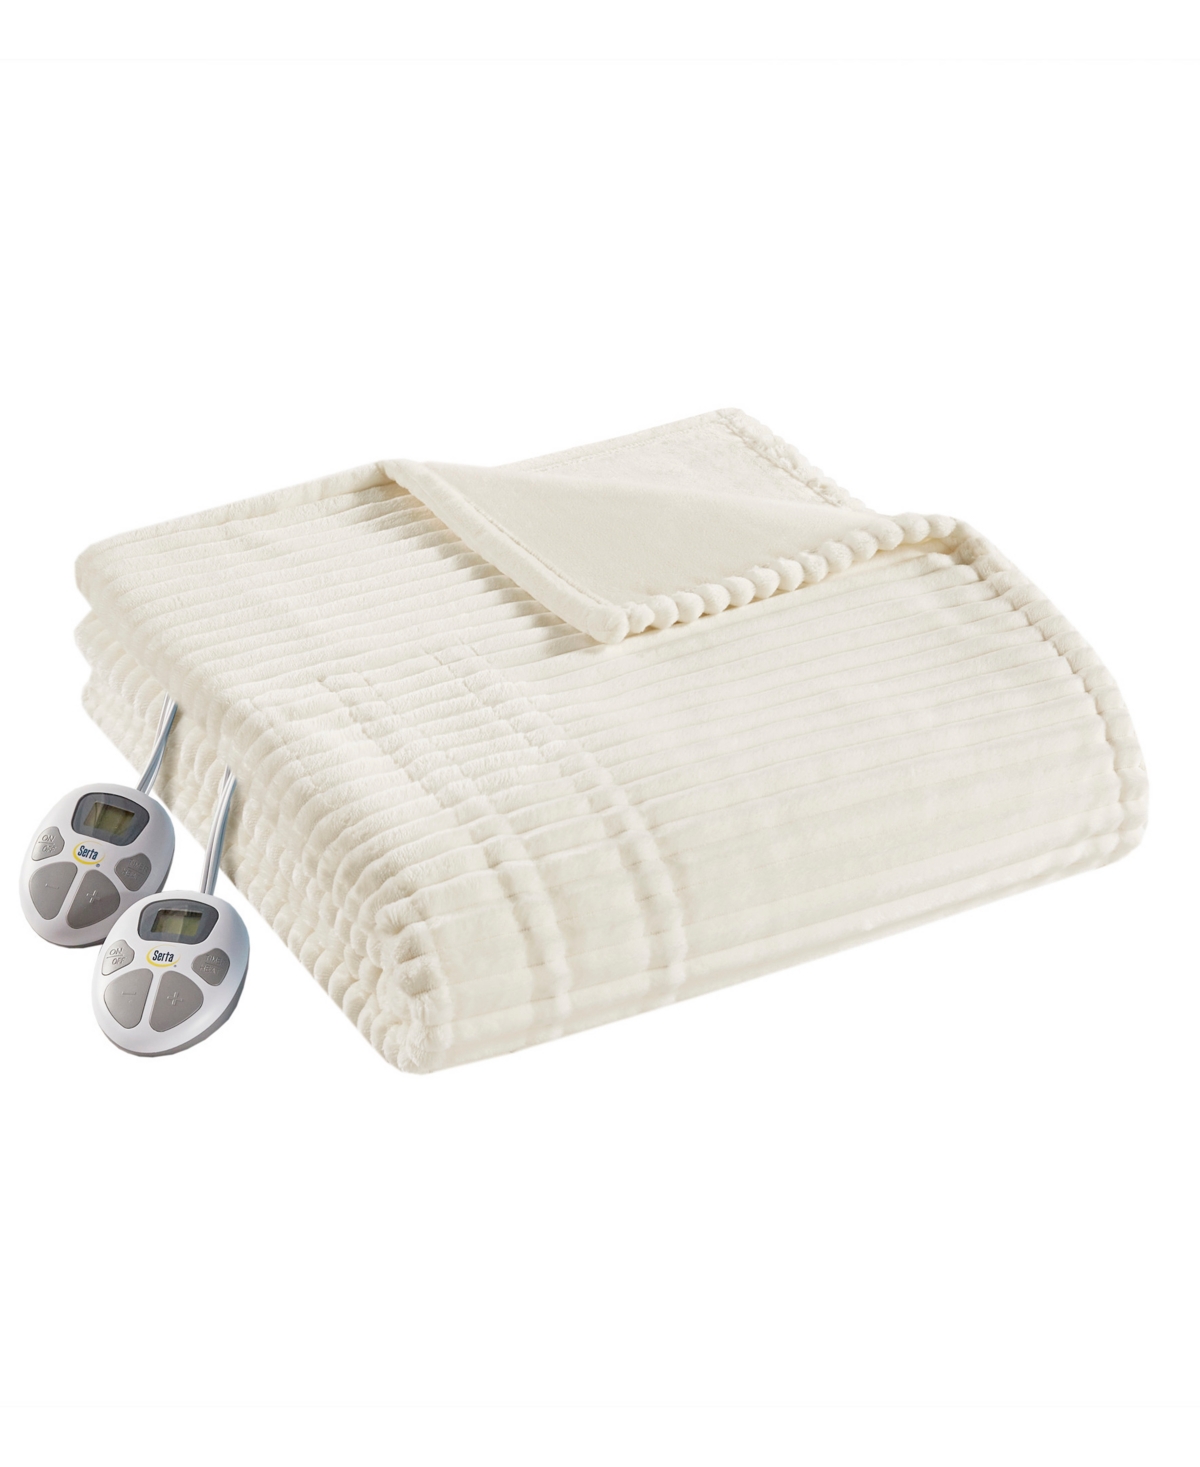 Serta Corded Plush Heated Blanket, King In Ivory